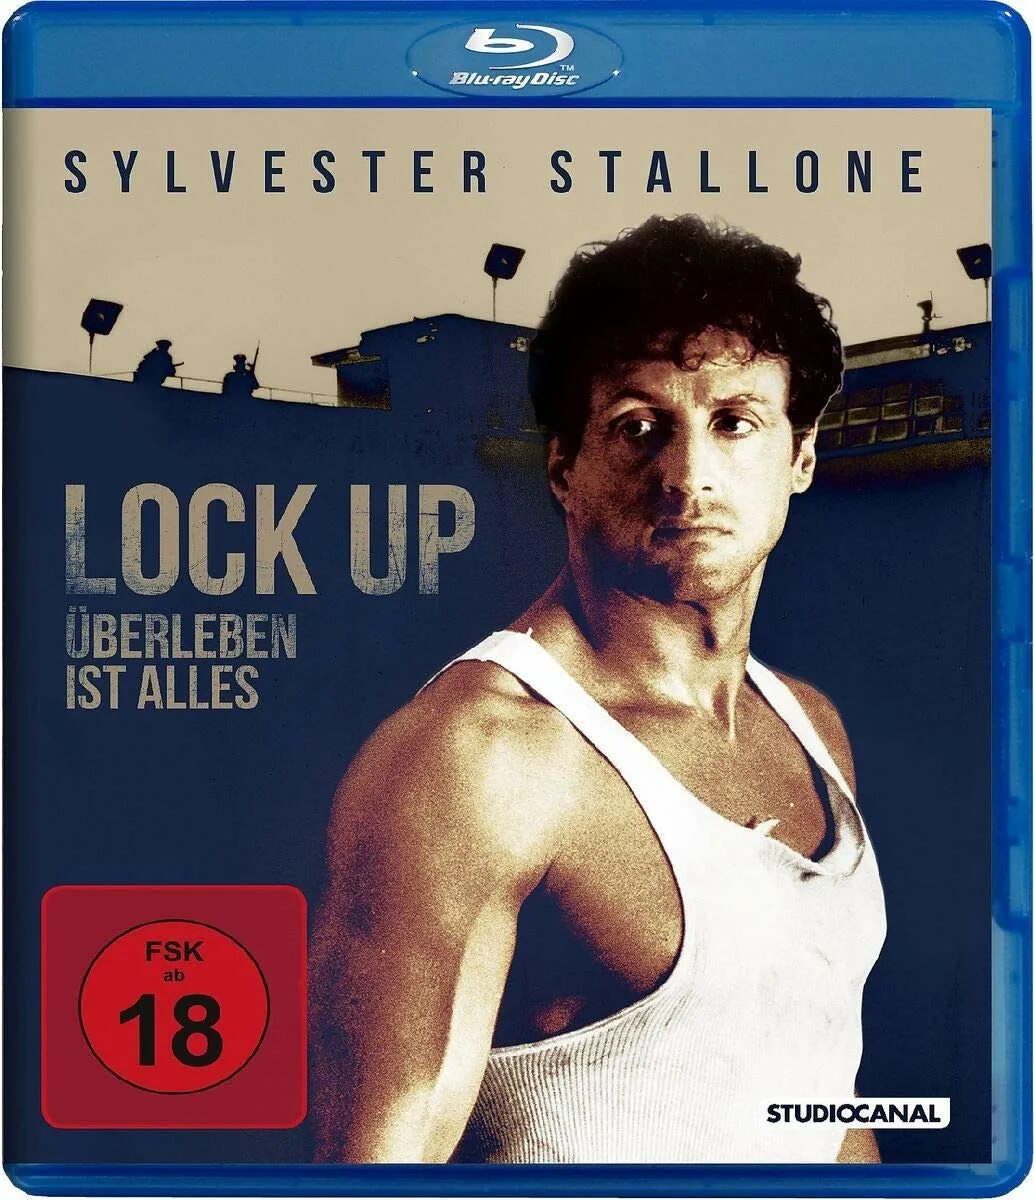 Lock up 1989 Fight. Lock up, 1989 DVD Covers. Lock up период